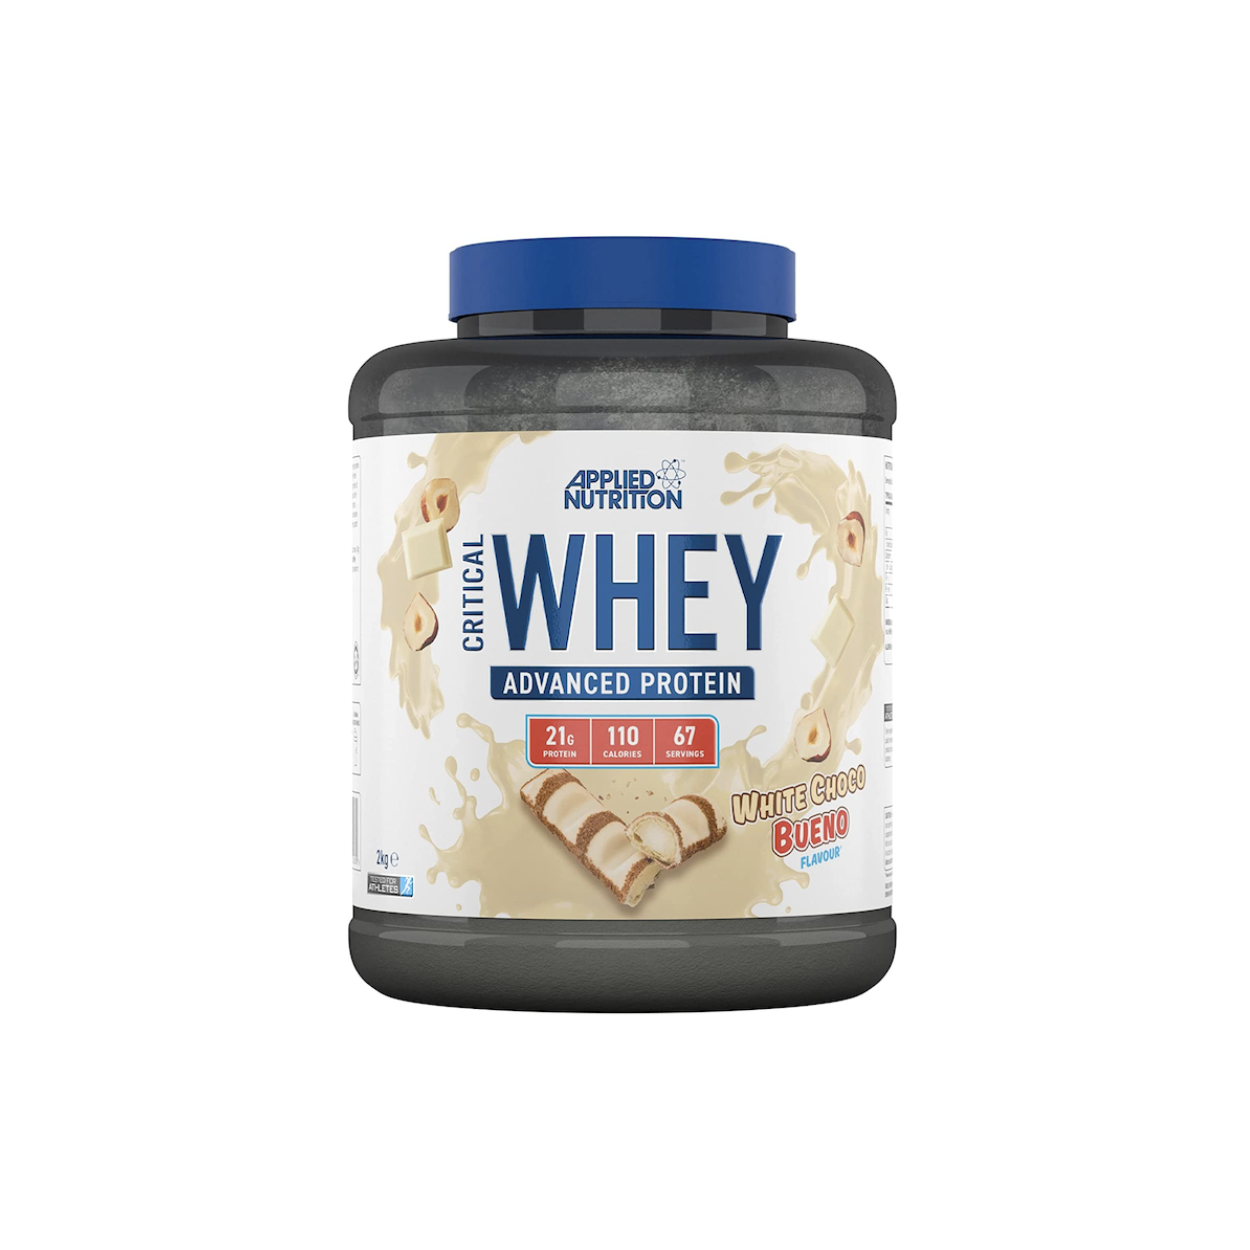 Applied Nutrition Critical Whey Advanced Protein White Choco Bueno